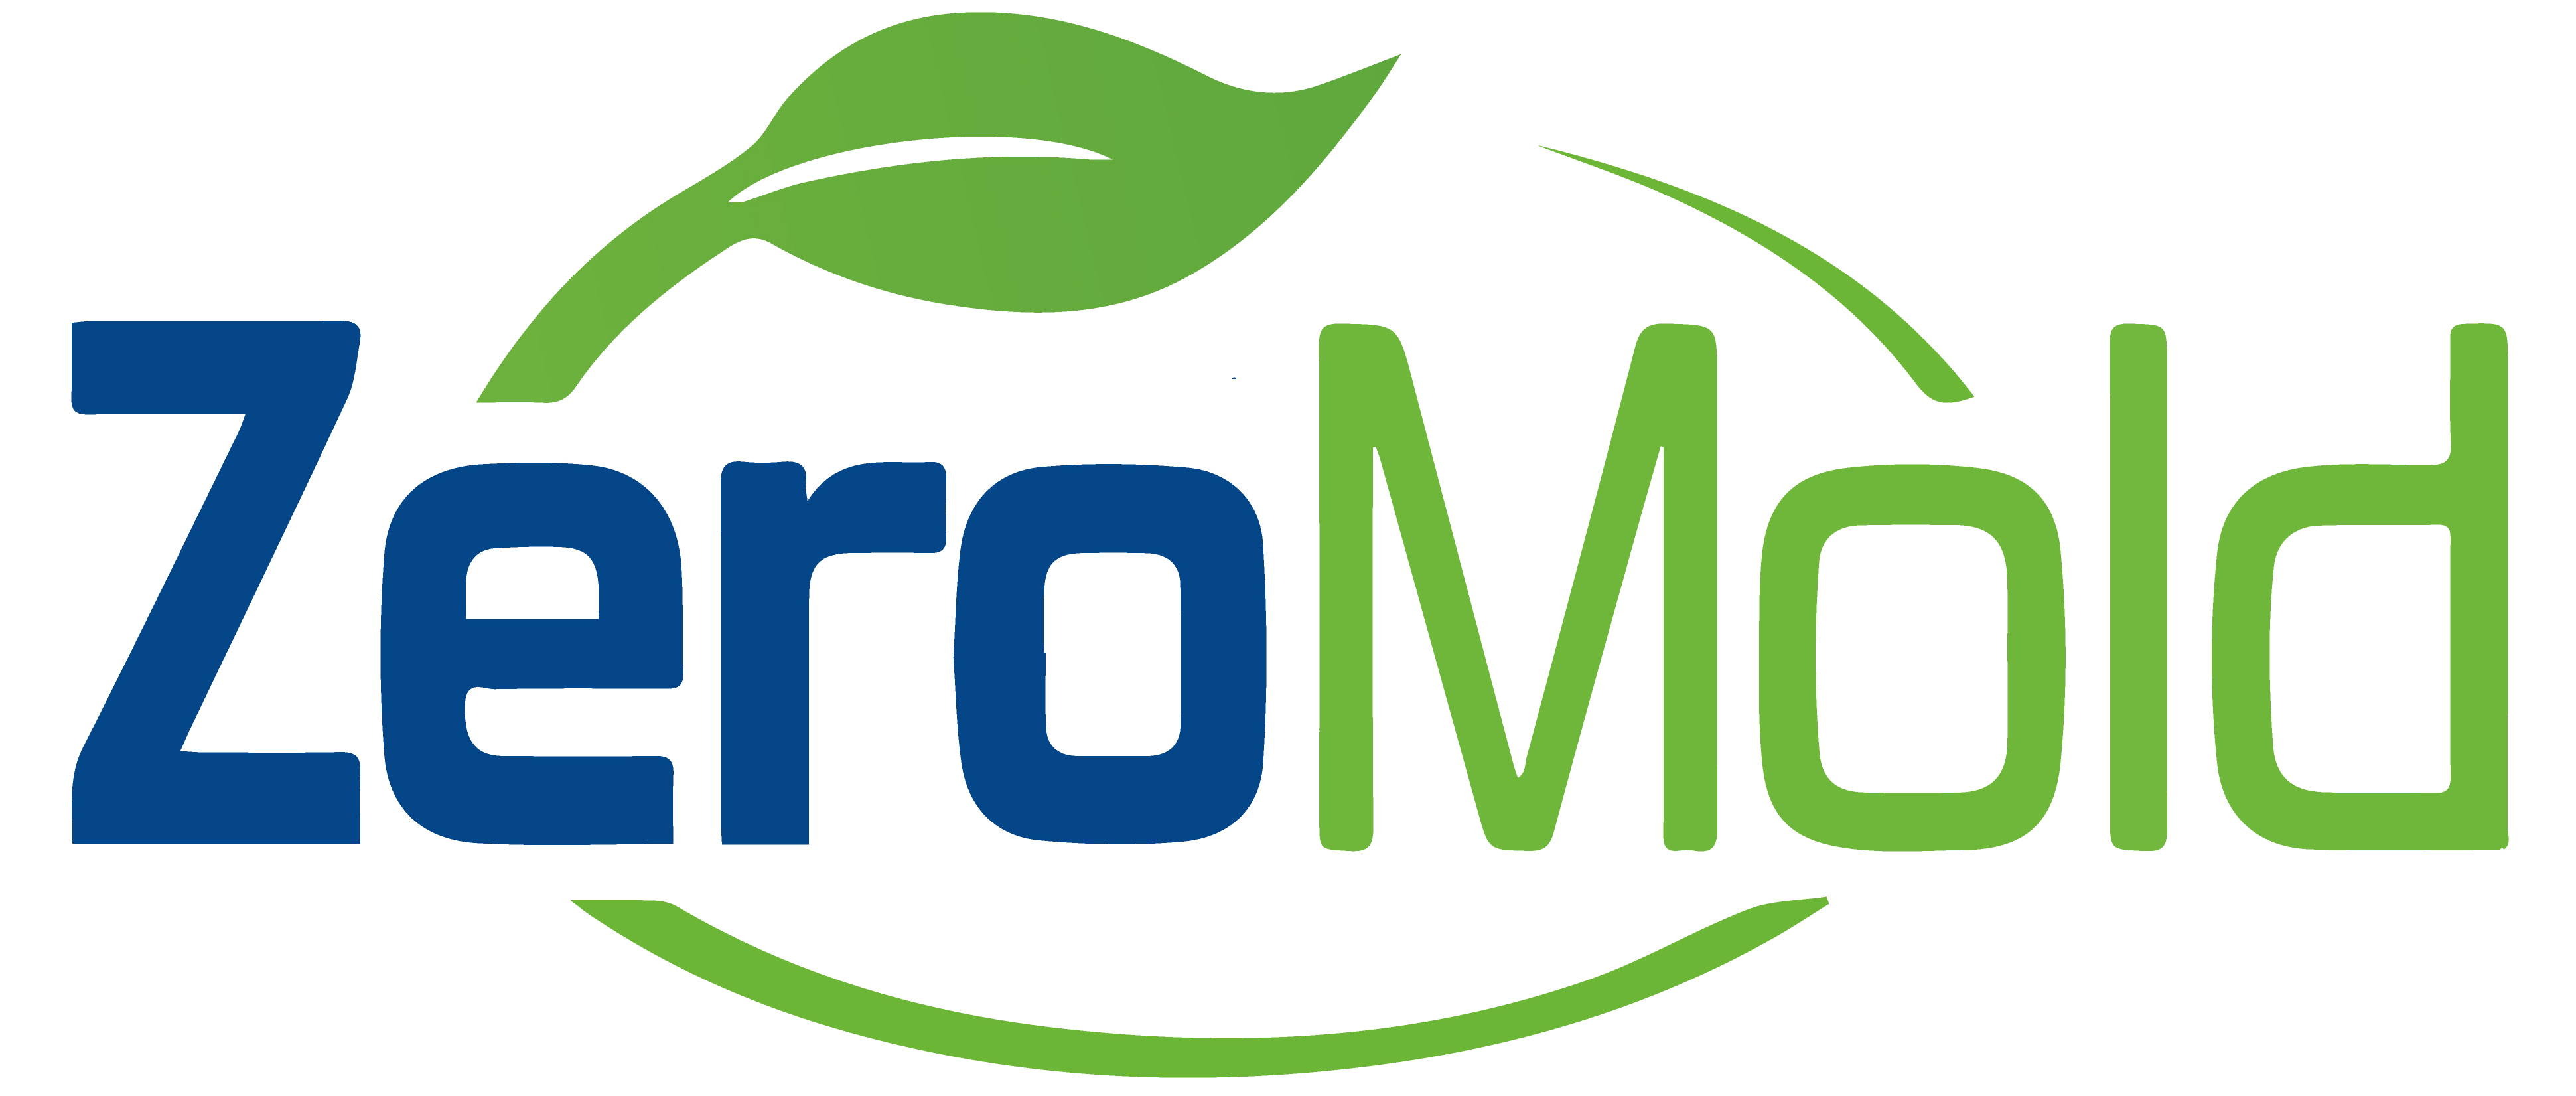 ZeroMold Logo